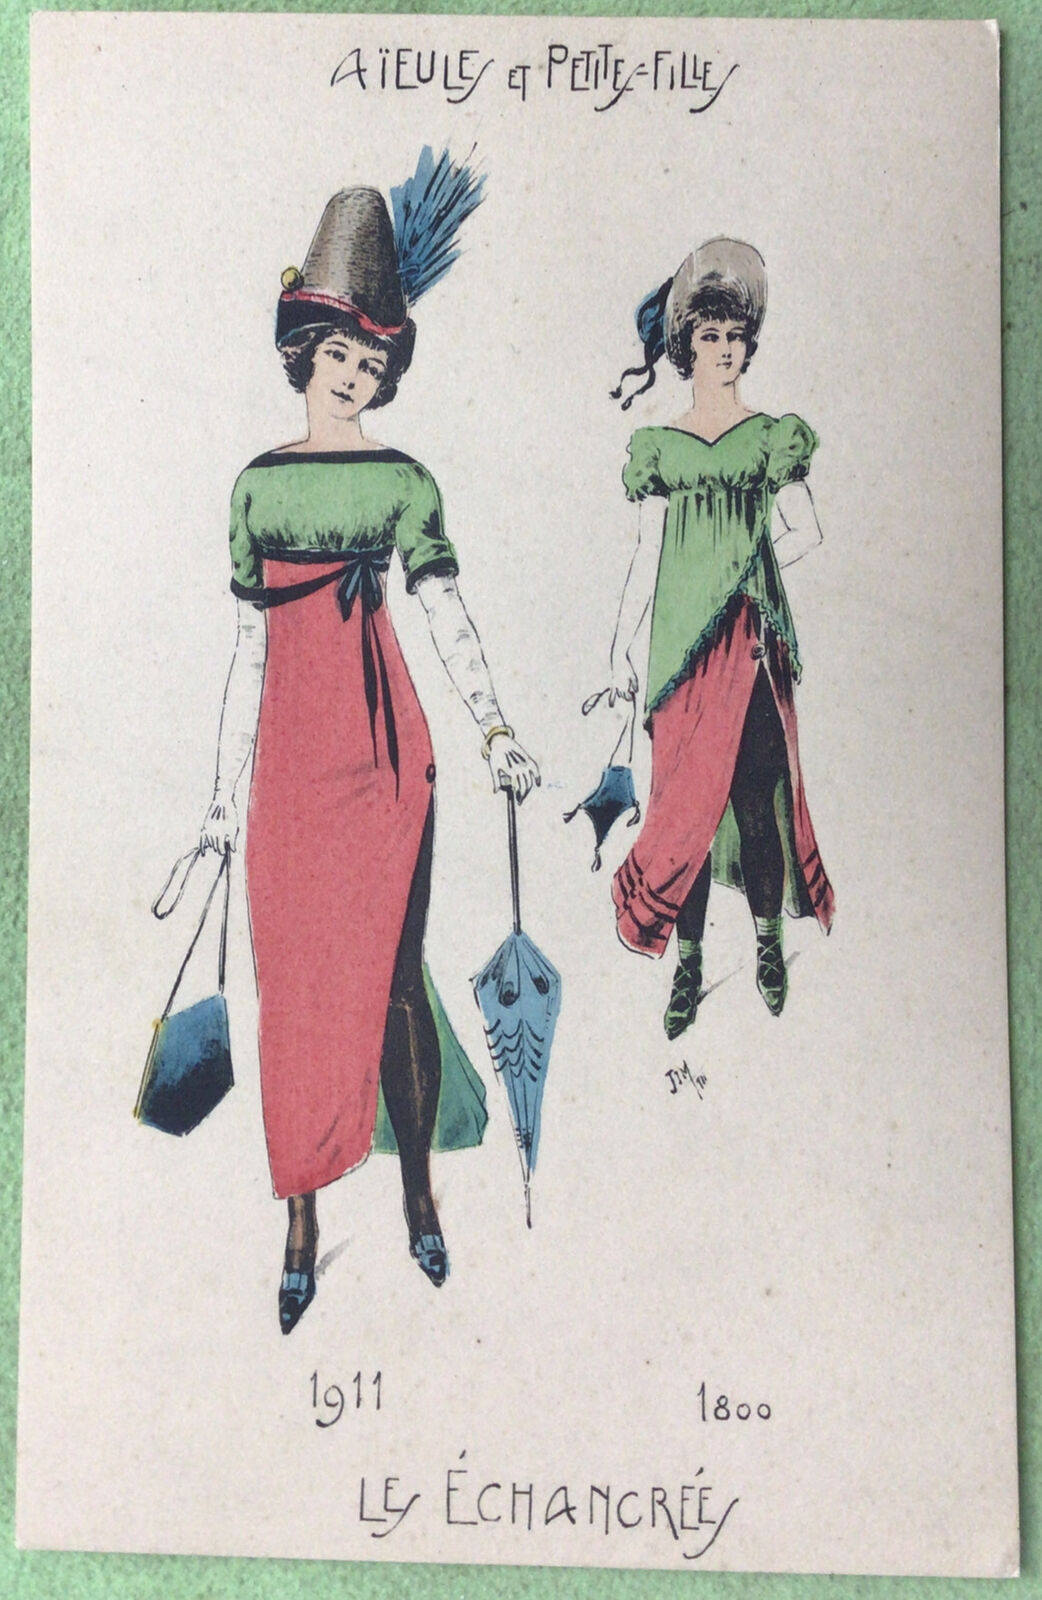 All Echancree Style Mucha Petite Fashion Girls 1911 Vintage Postcard